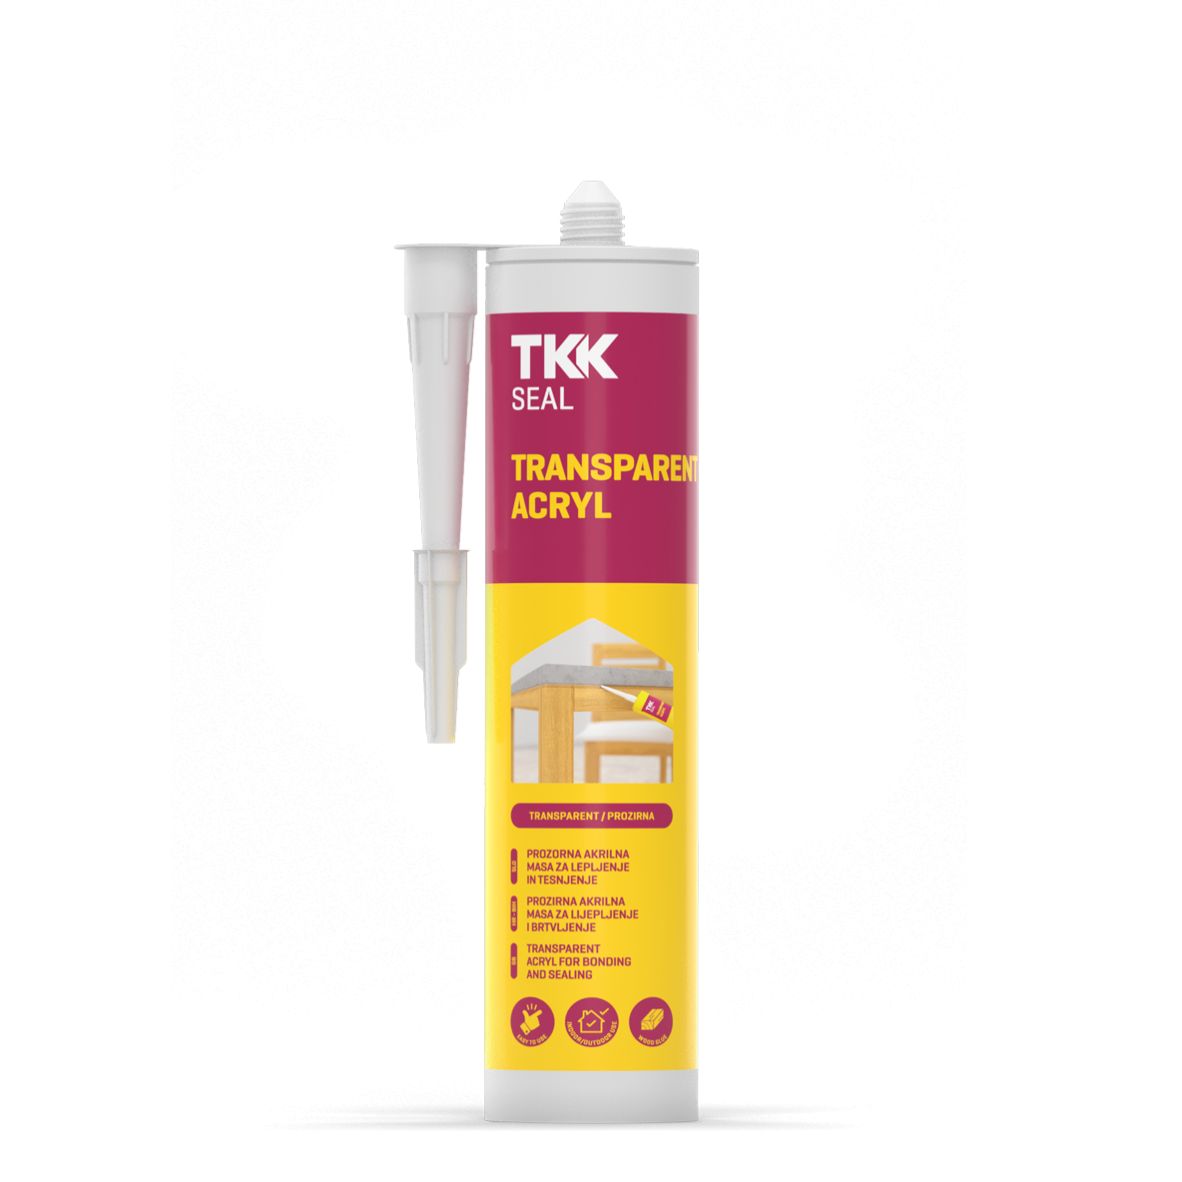 TKK Seal Transparent Acryl